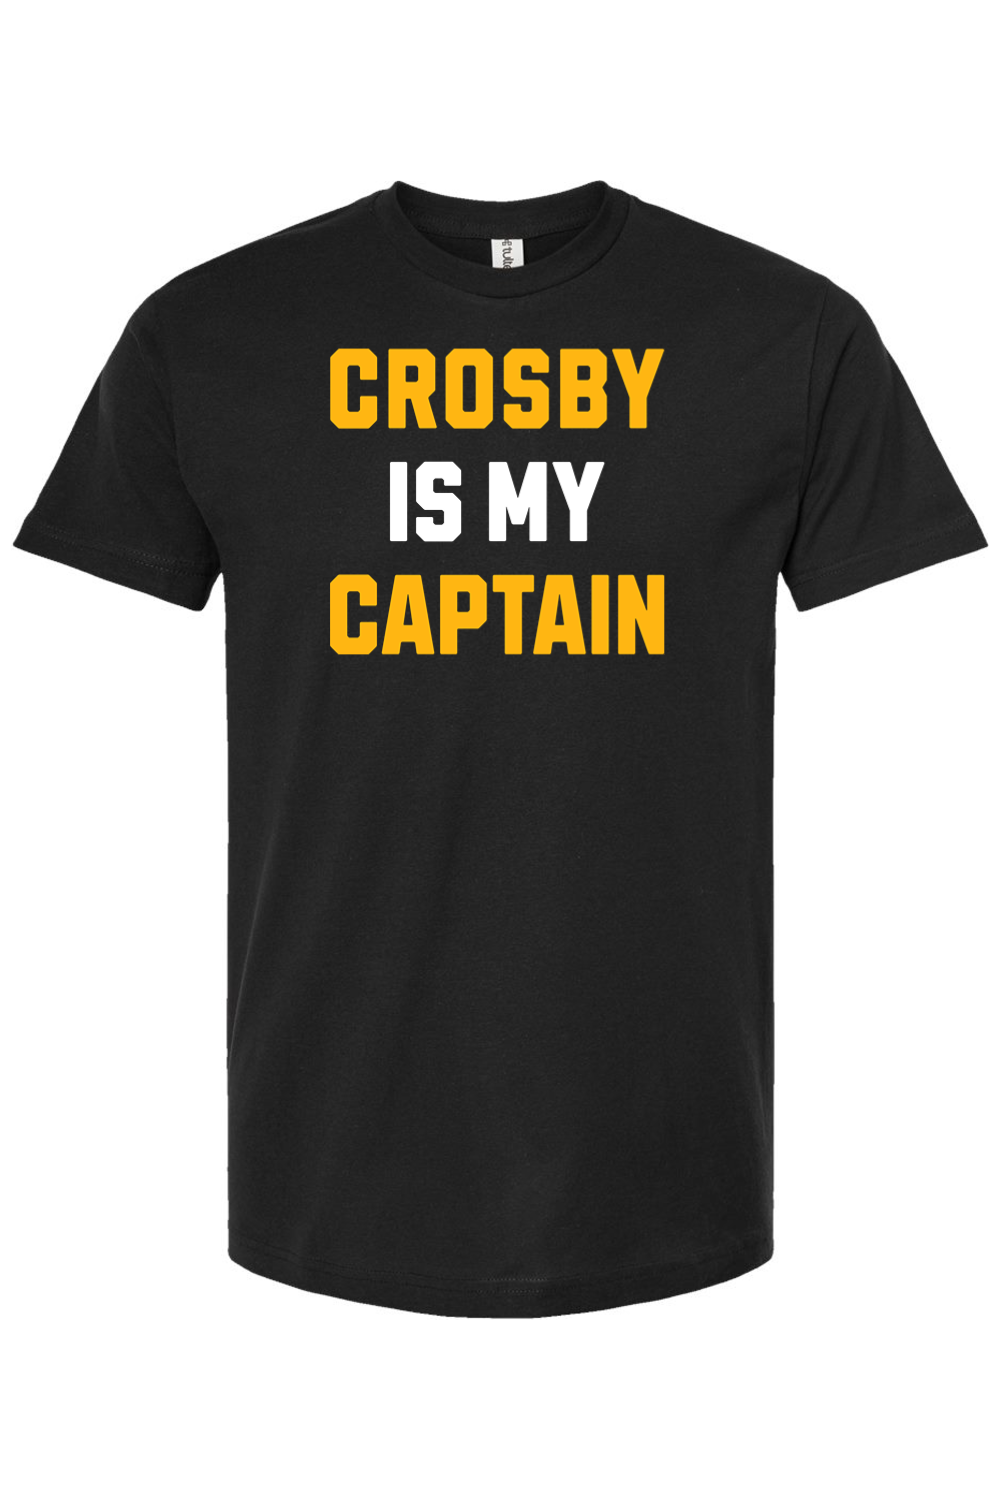 Crosby is My Captain - Yinzylvania